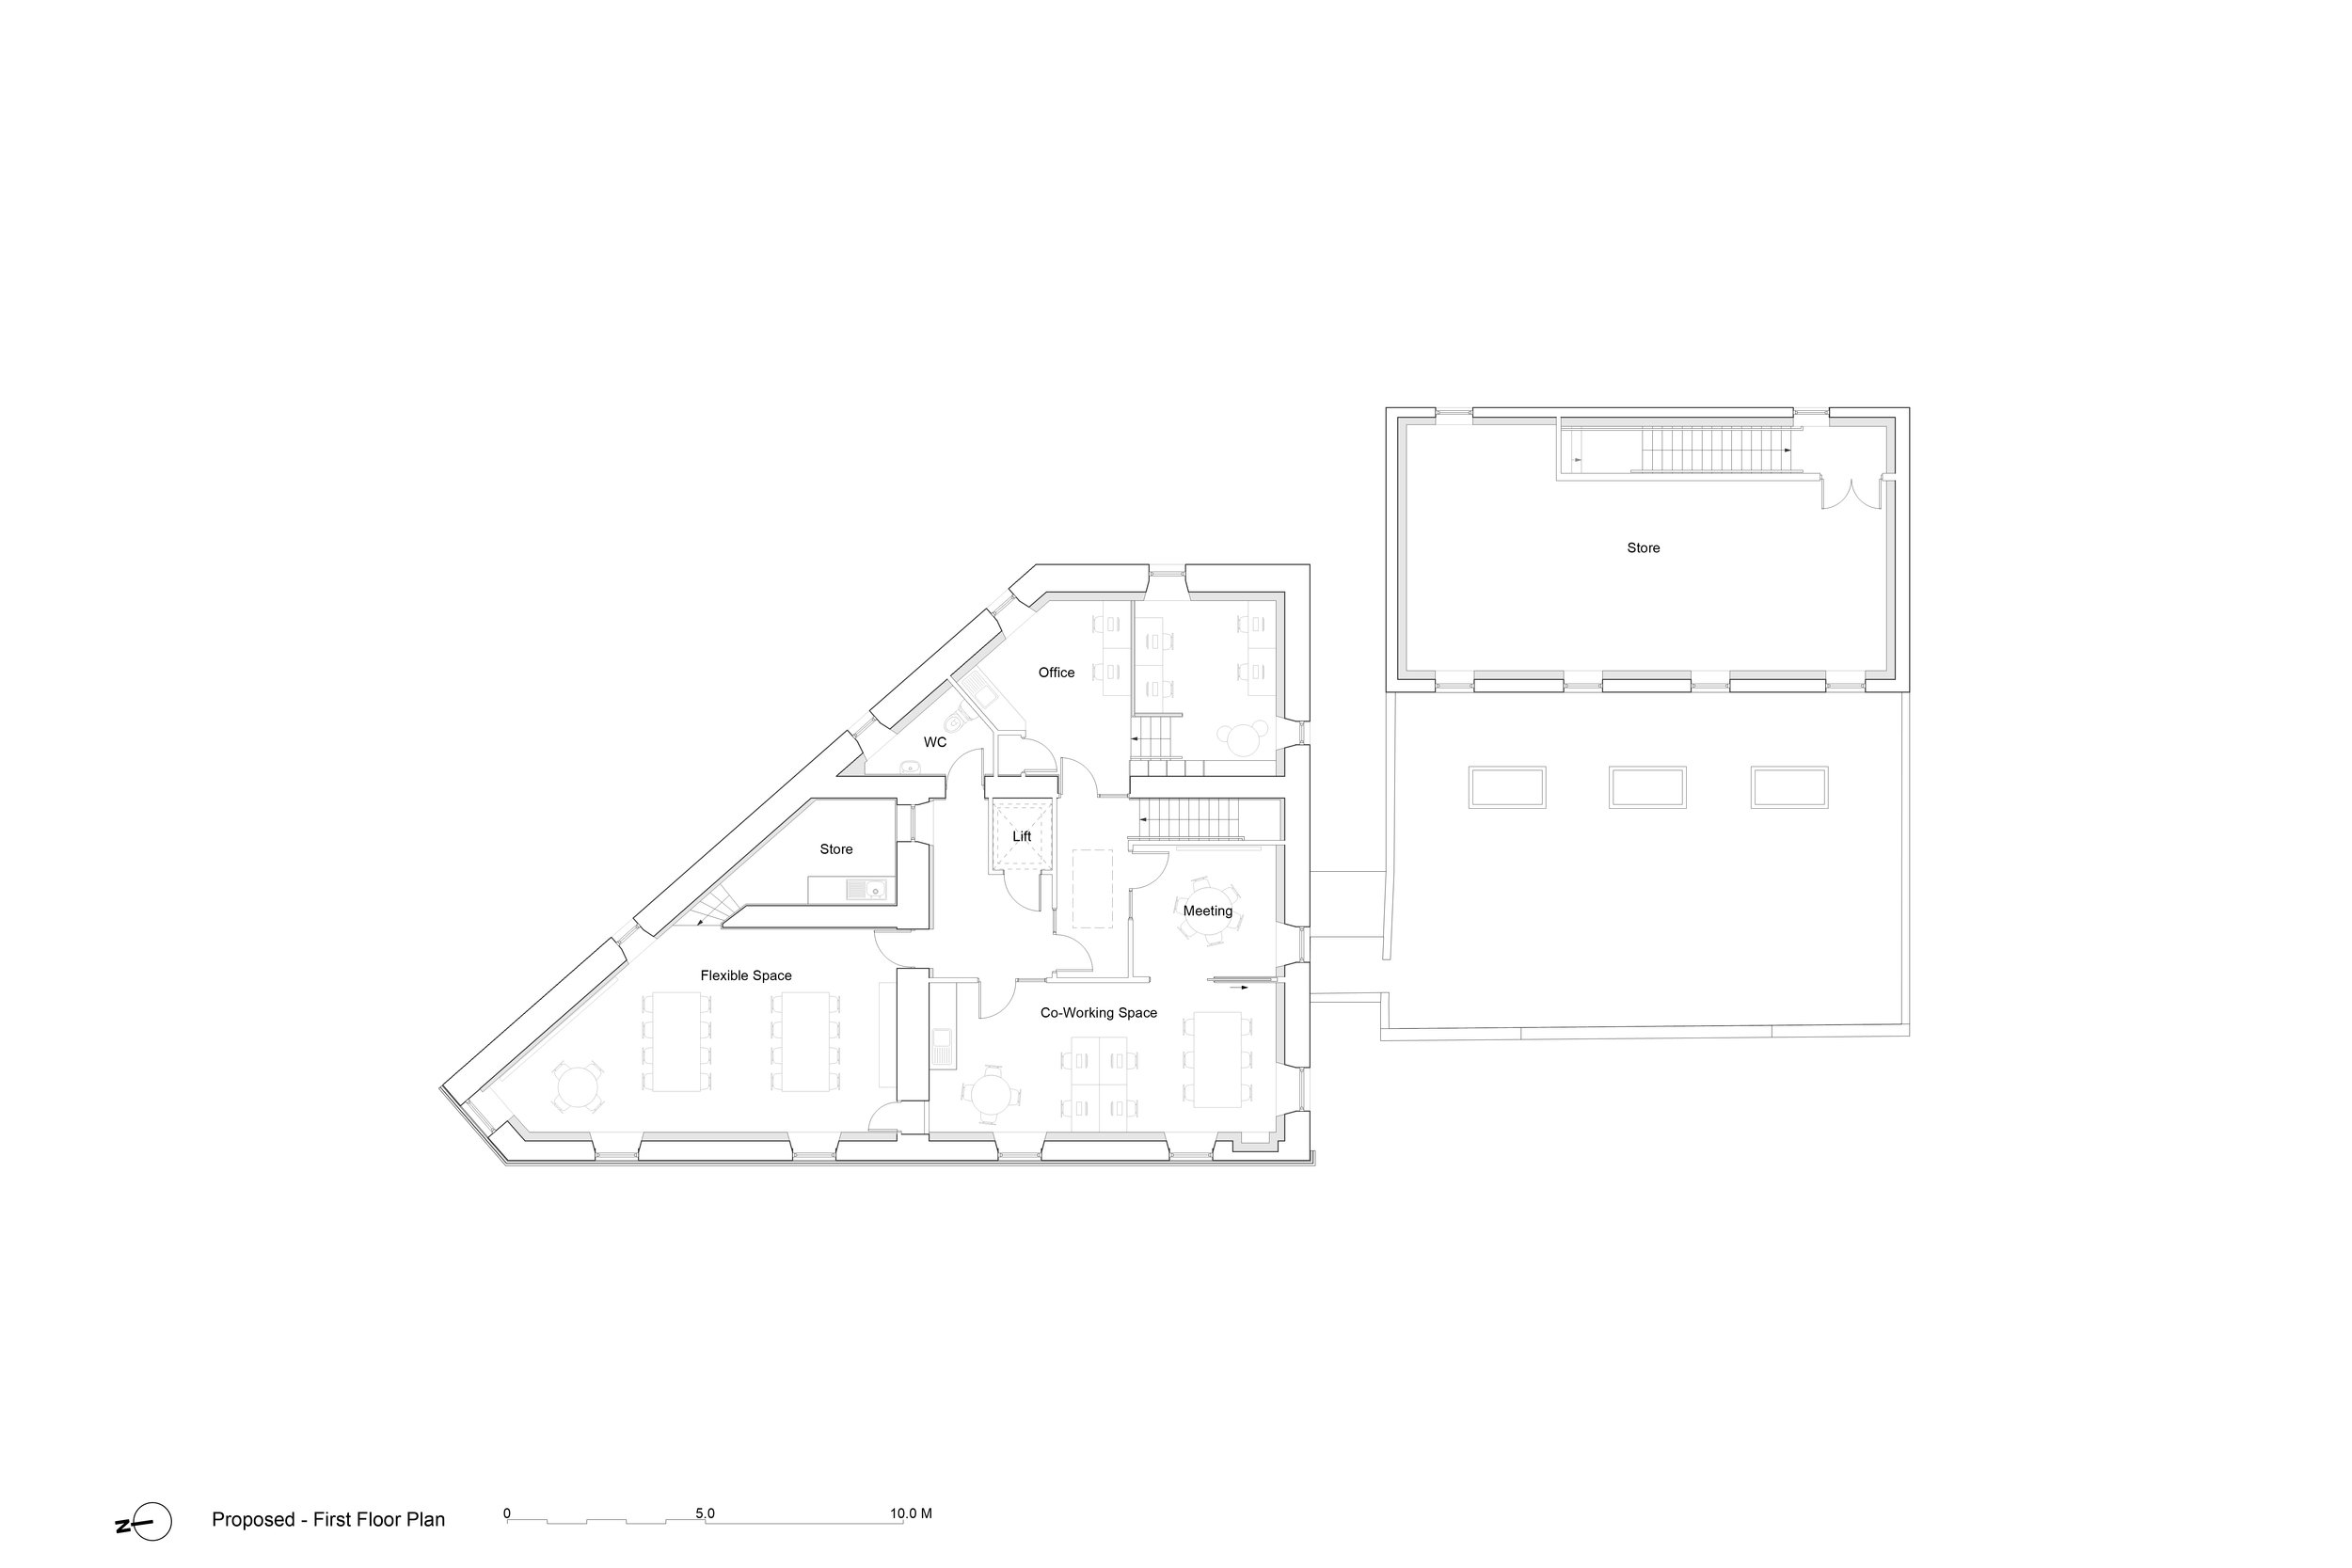 8 - First Floor + Attic Plan - As Proposed.JPG